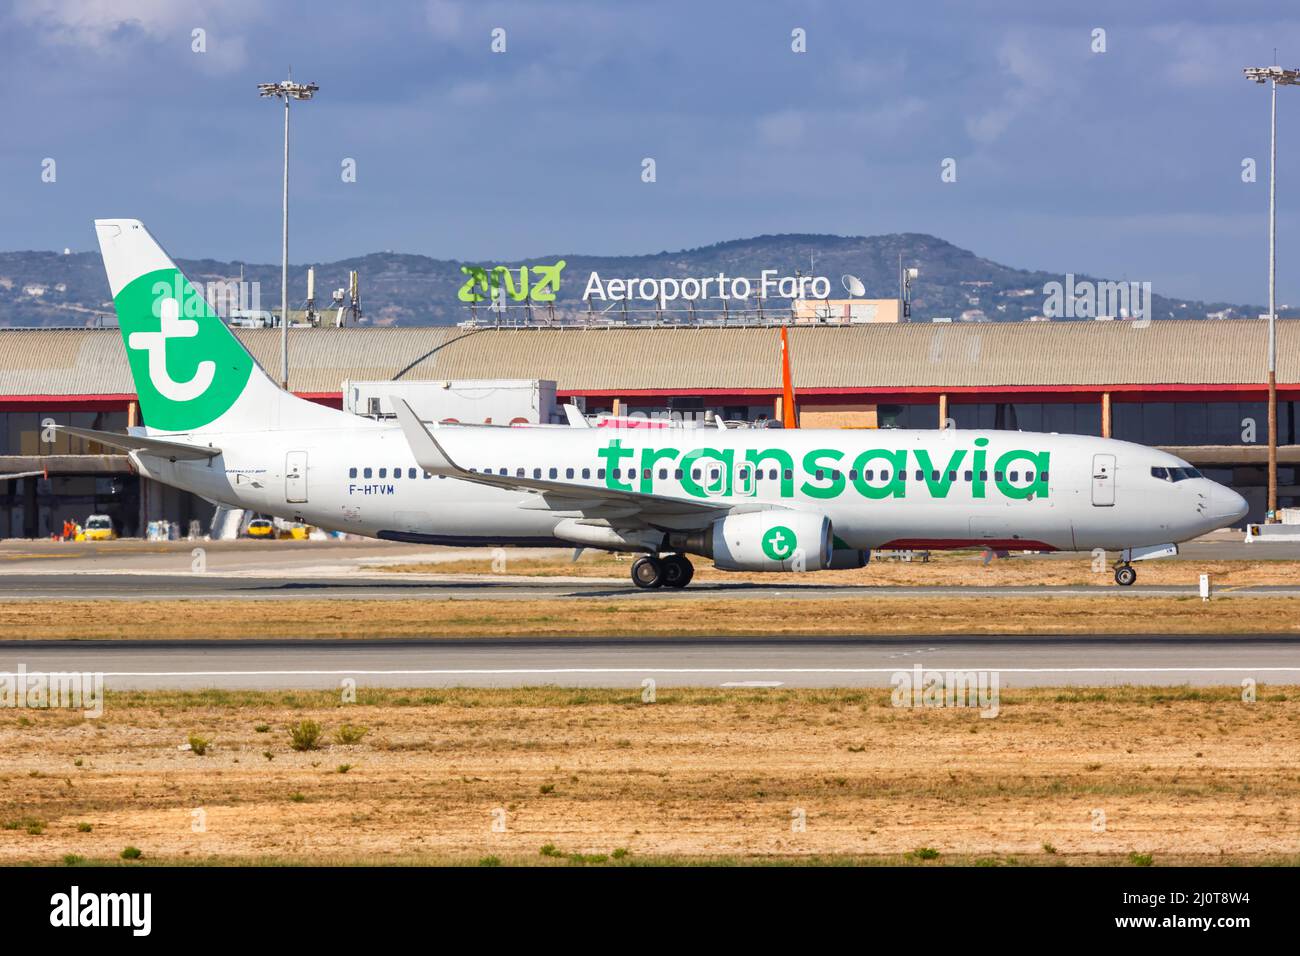 Transavia Boeing 737-800 aircraft Faro airport in Portugal Stock Photo